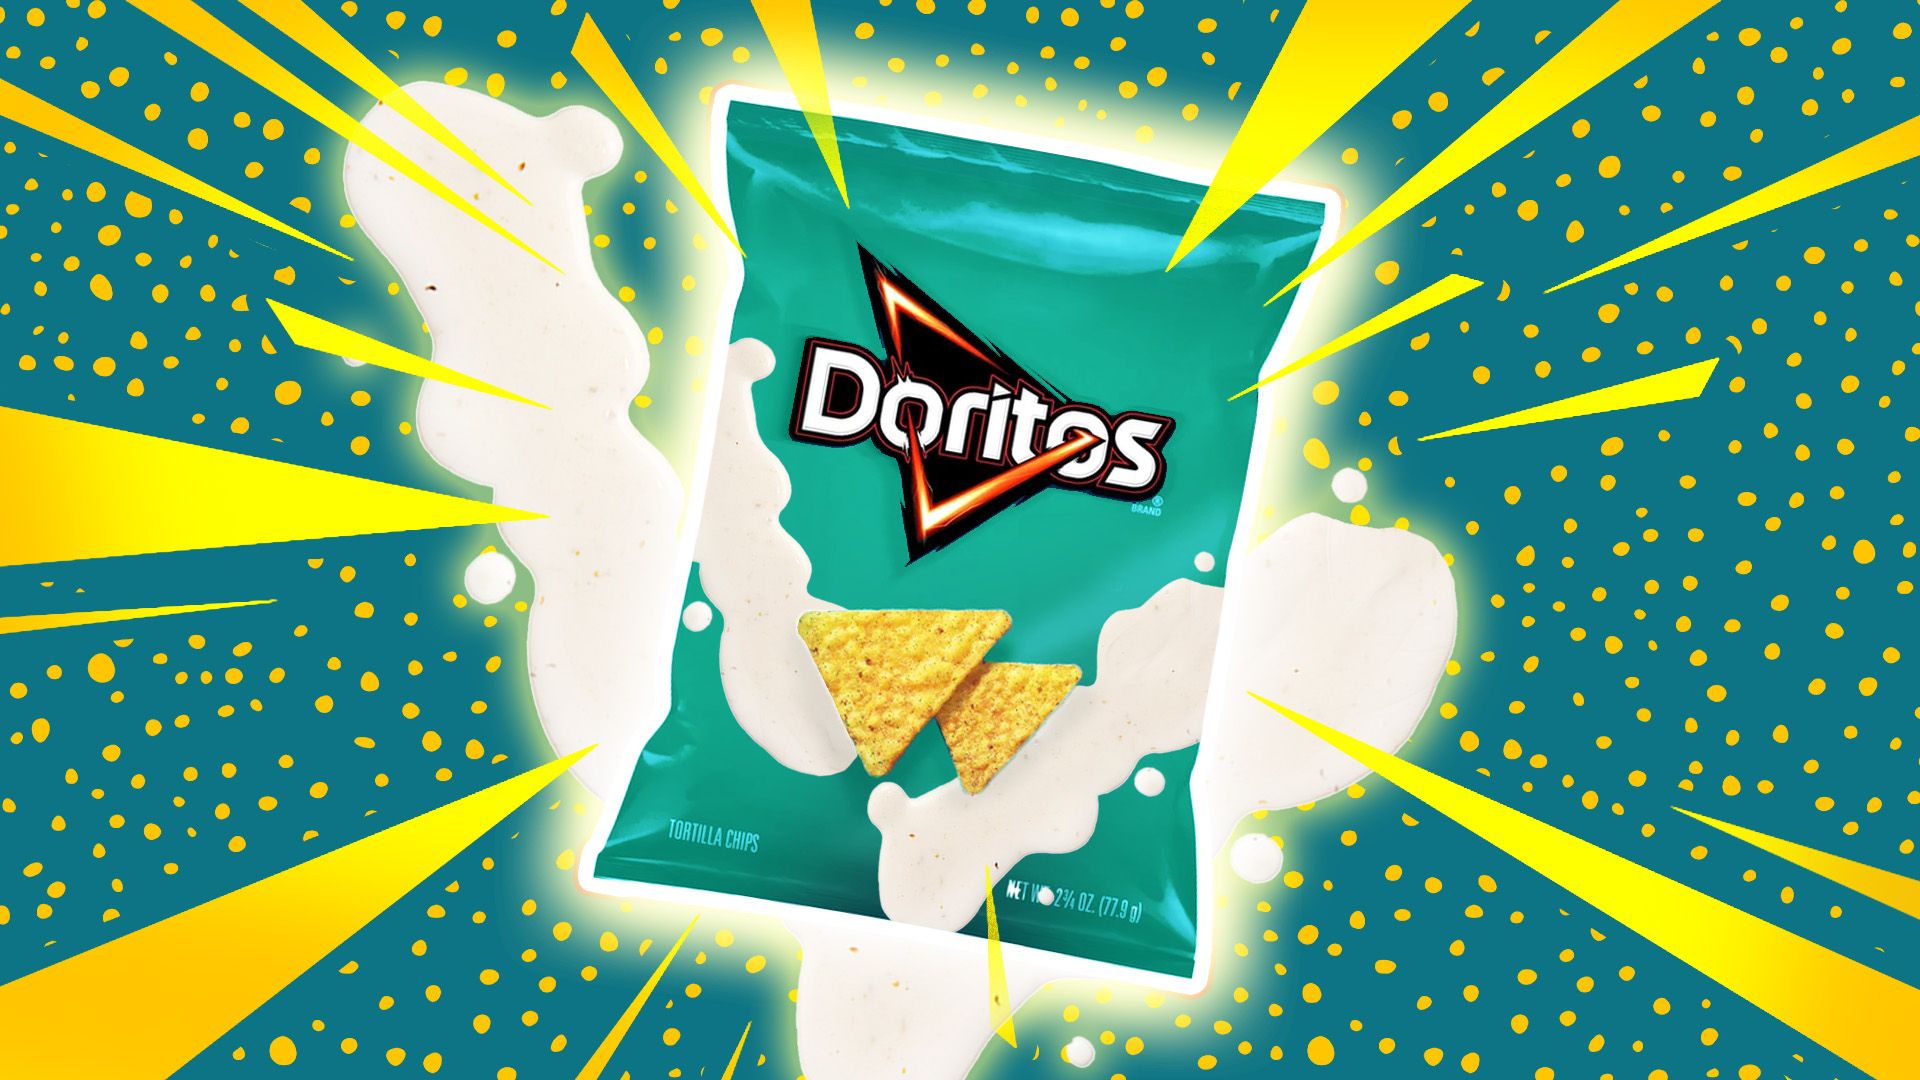 A bag of doritos with milk splashing out - Doritos